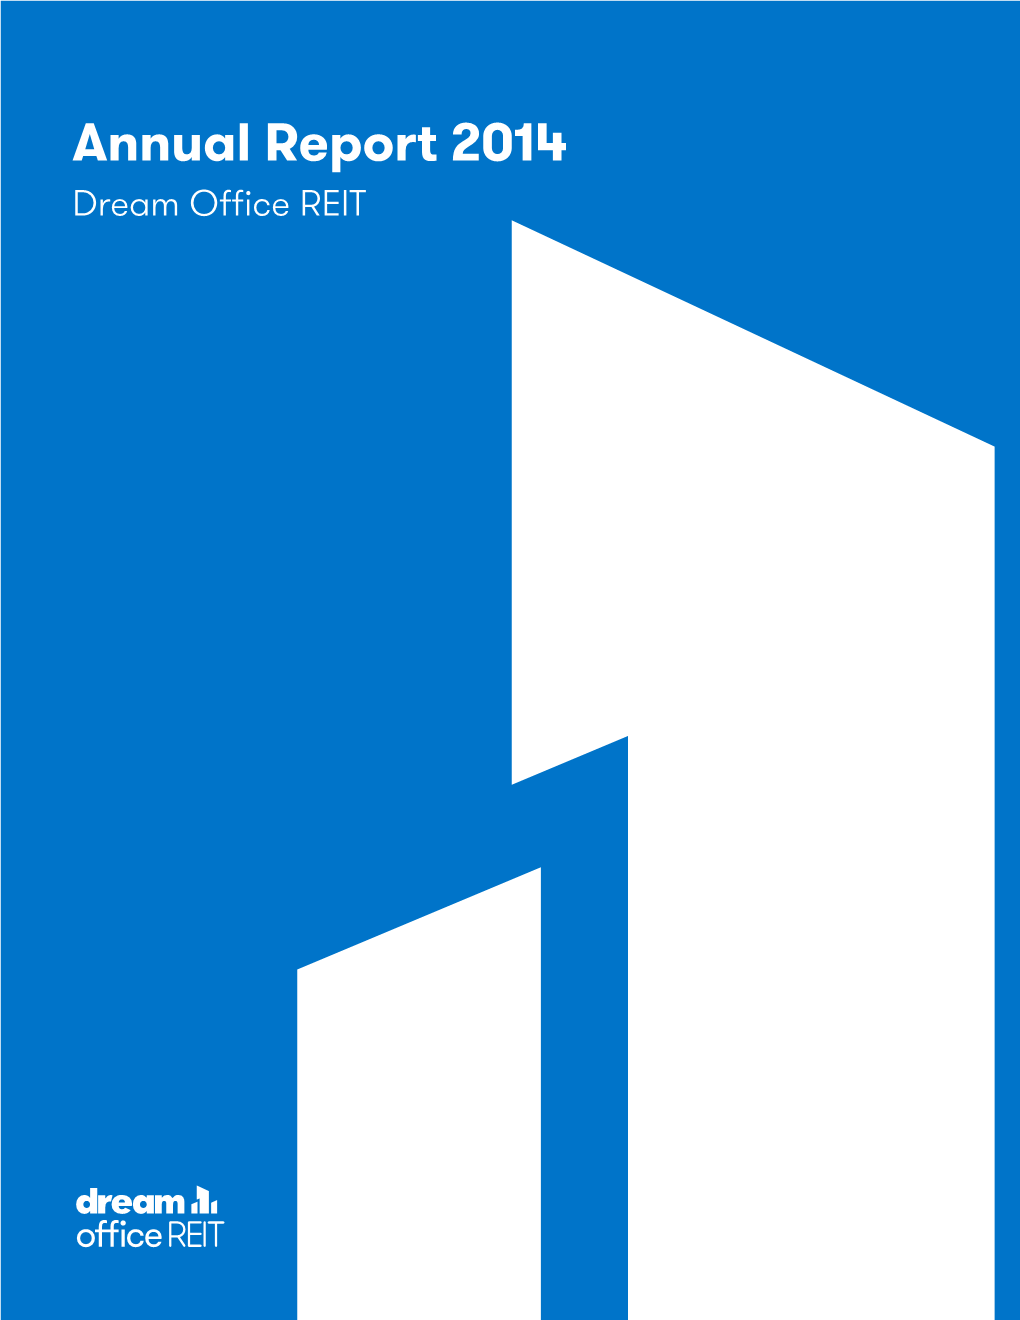 Annual Report 2014 Dream Office REIT 2014 ANNUAL REPORT